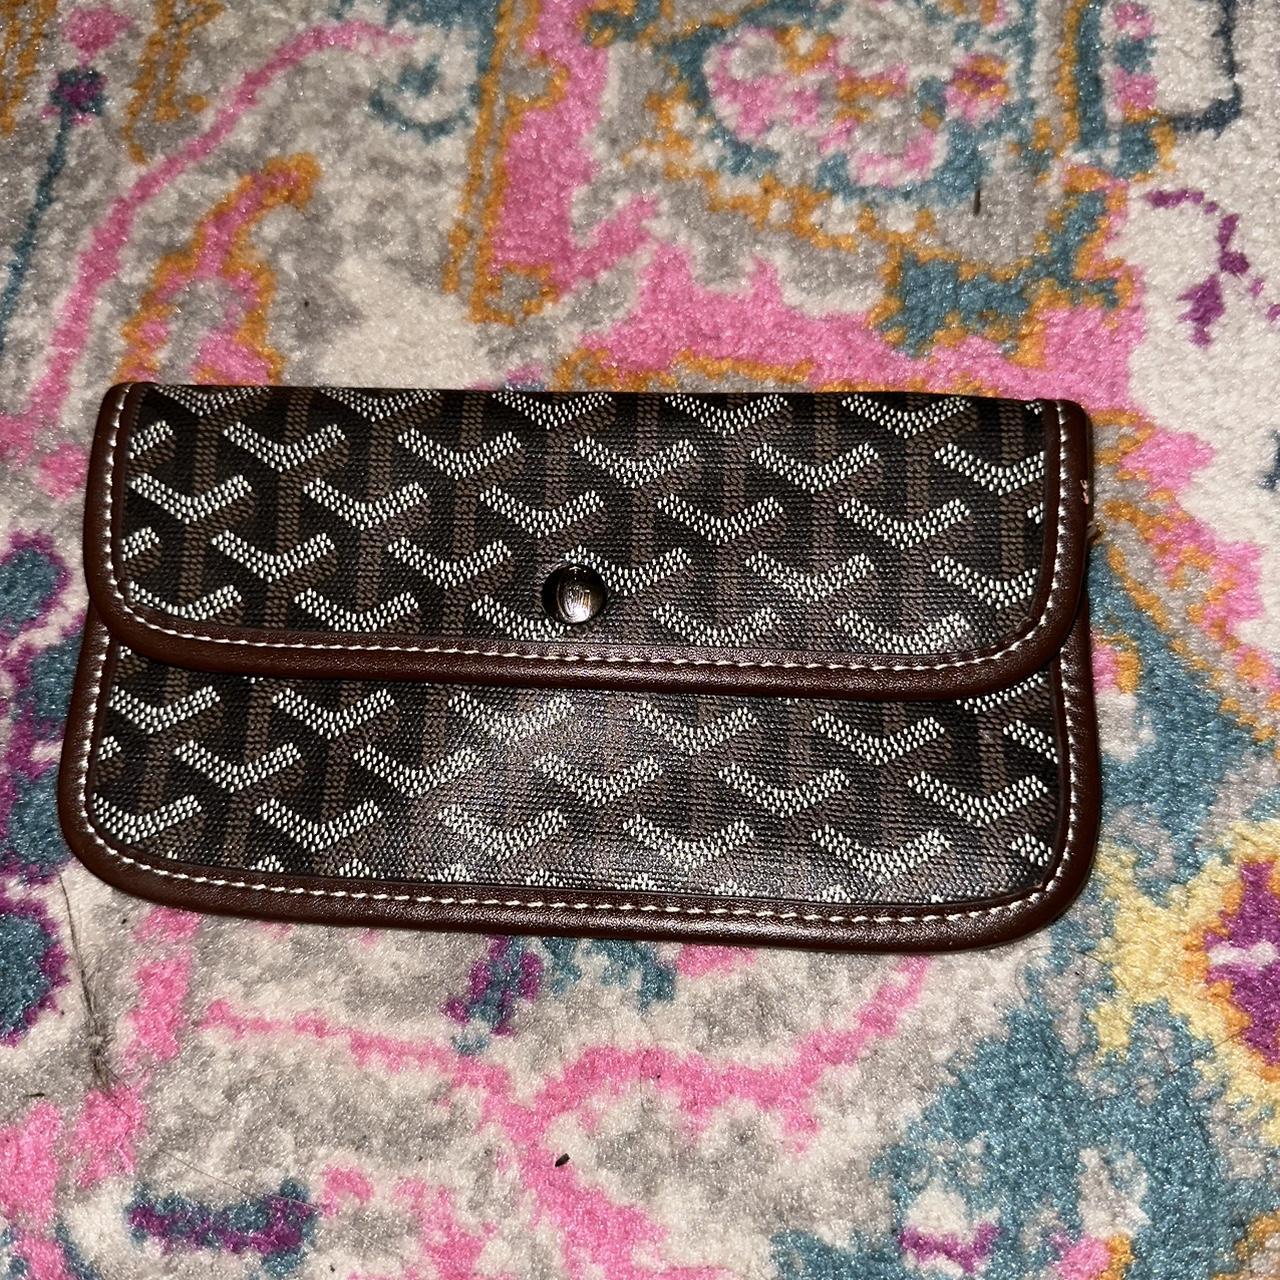 goyard monogram wallet